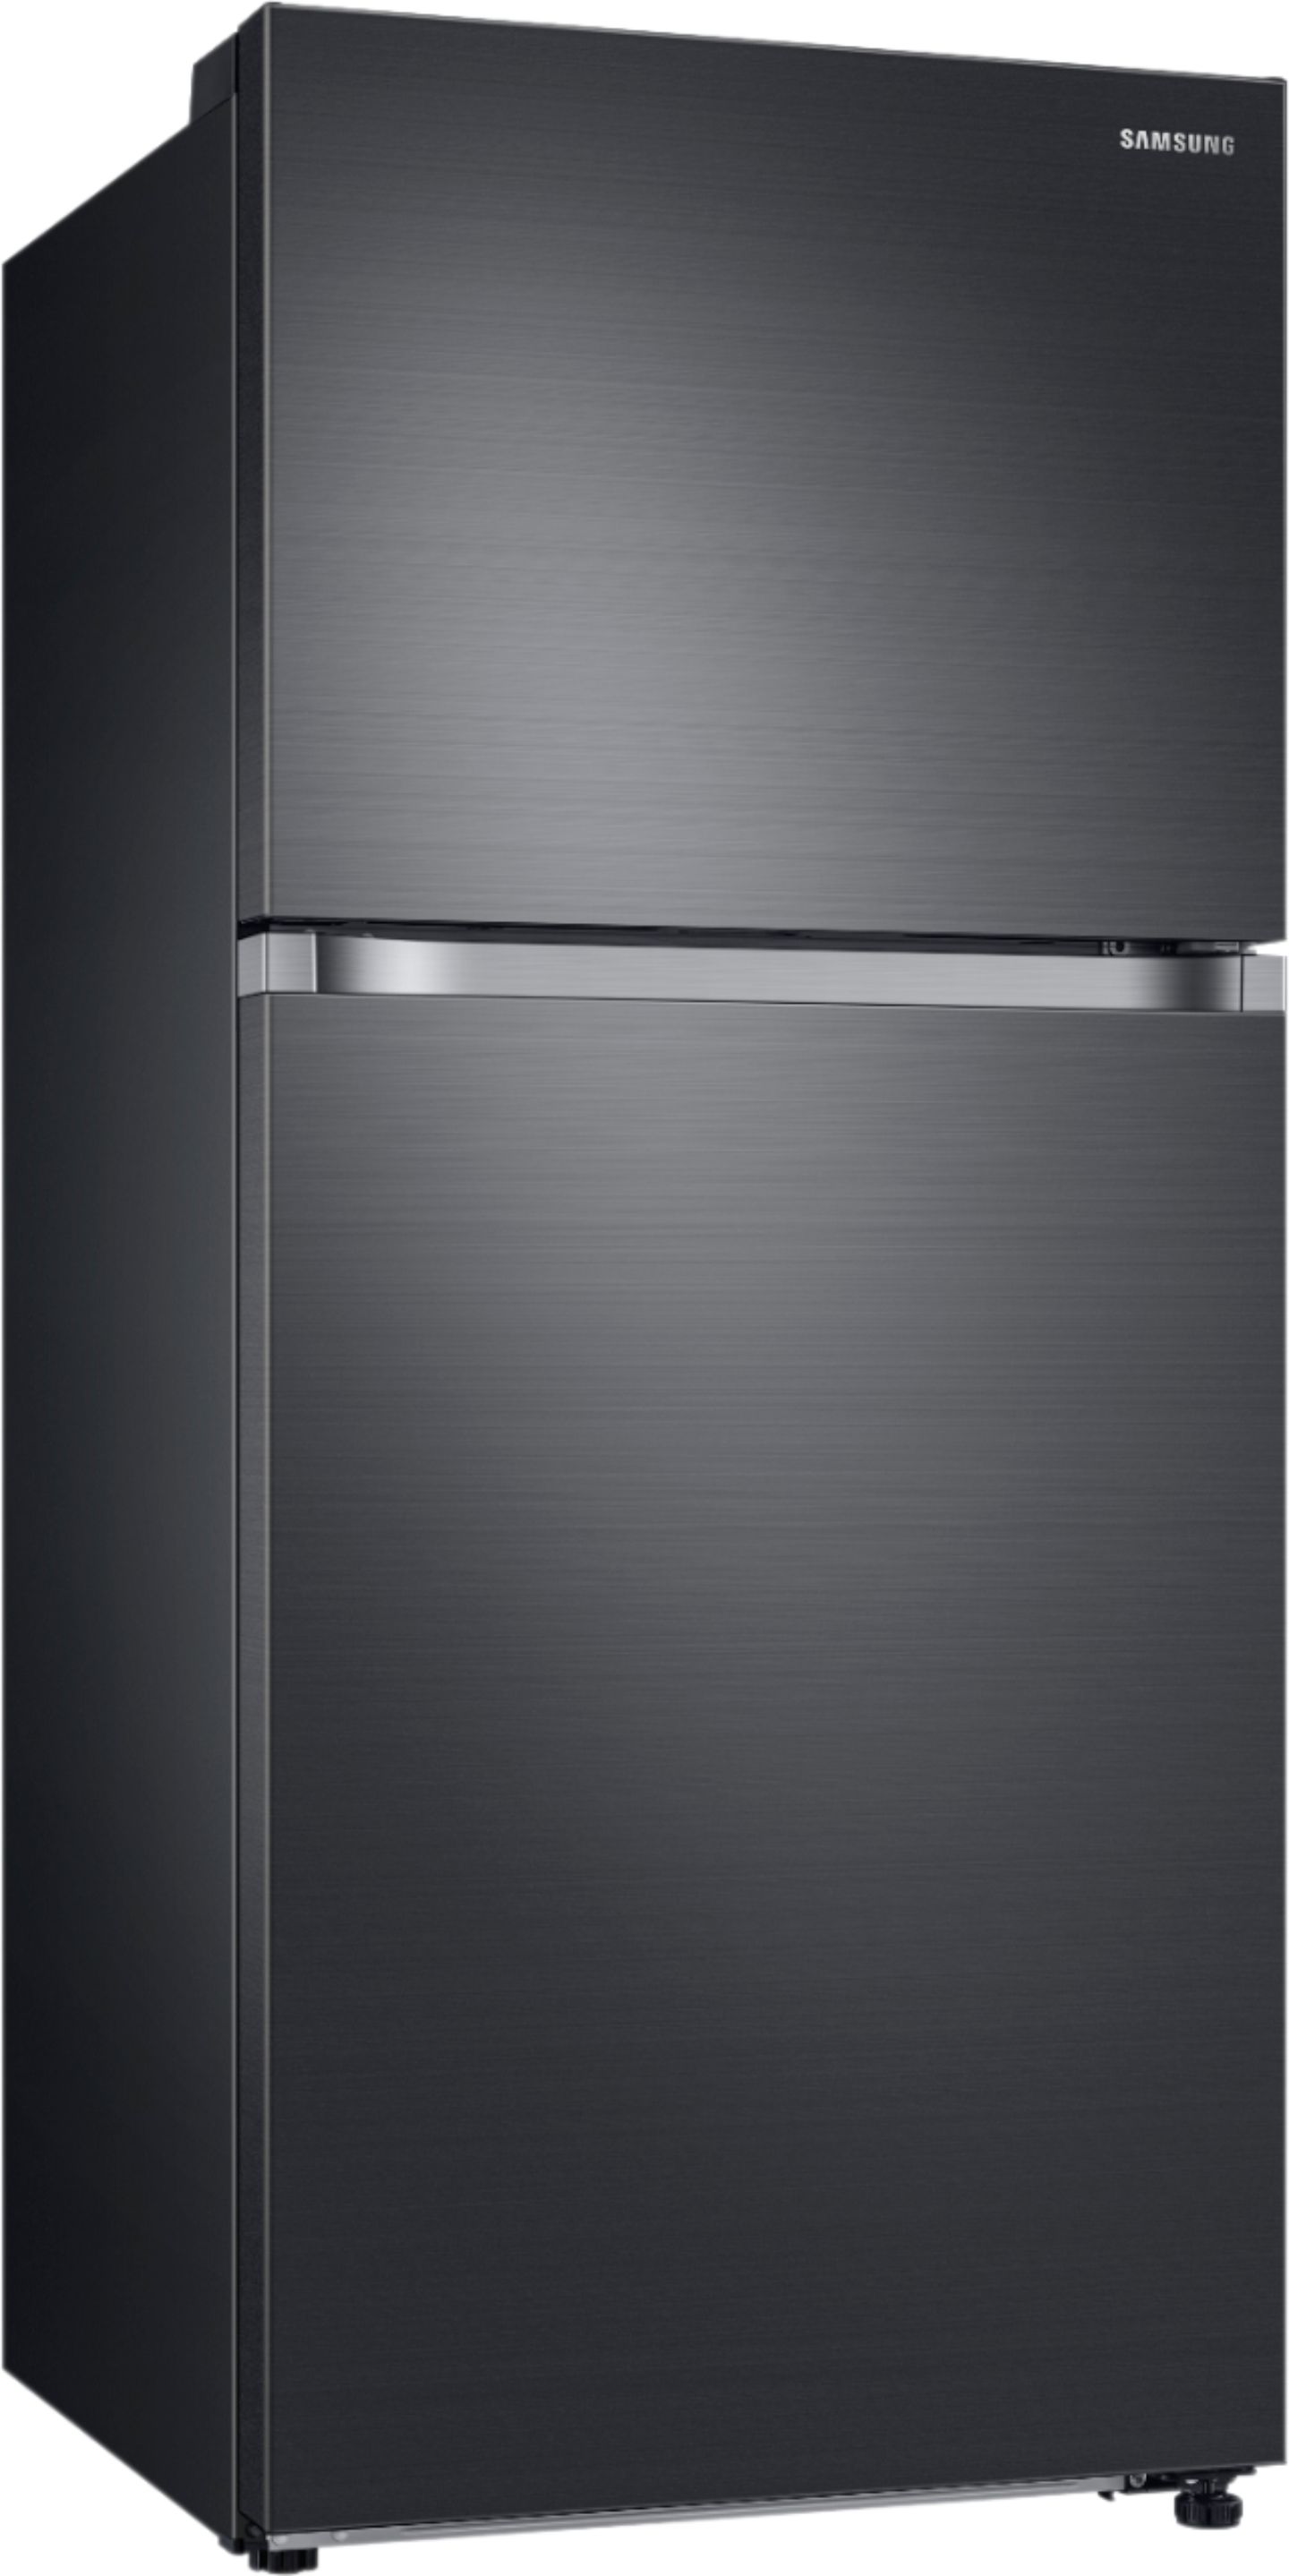 Samsung 17.6 cu. ft. Top-Freezer Refrigerator with FlexZone Stainless Steel  RT18M6215SR - Best Buy